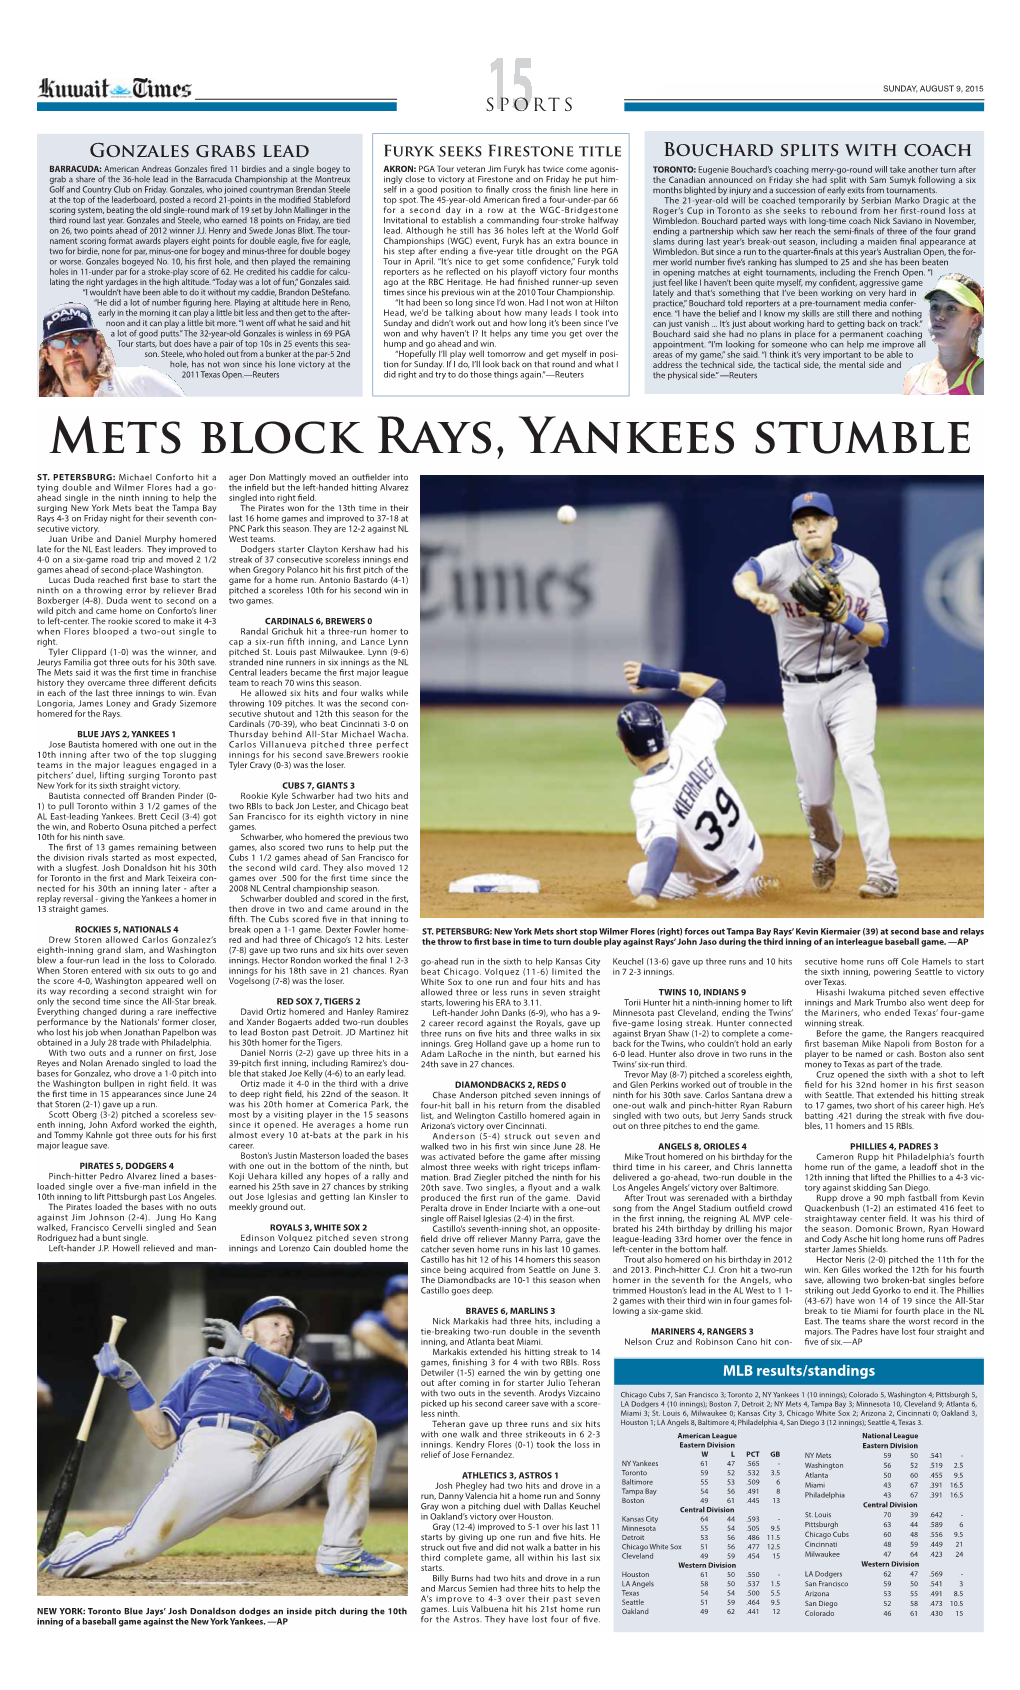 Mets Block Rays, Yankees Stumble